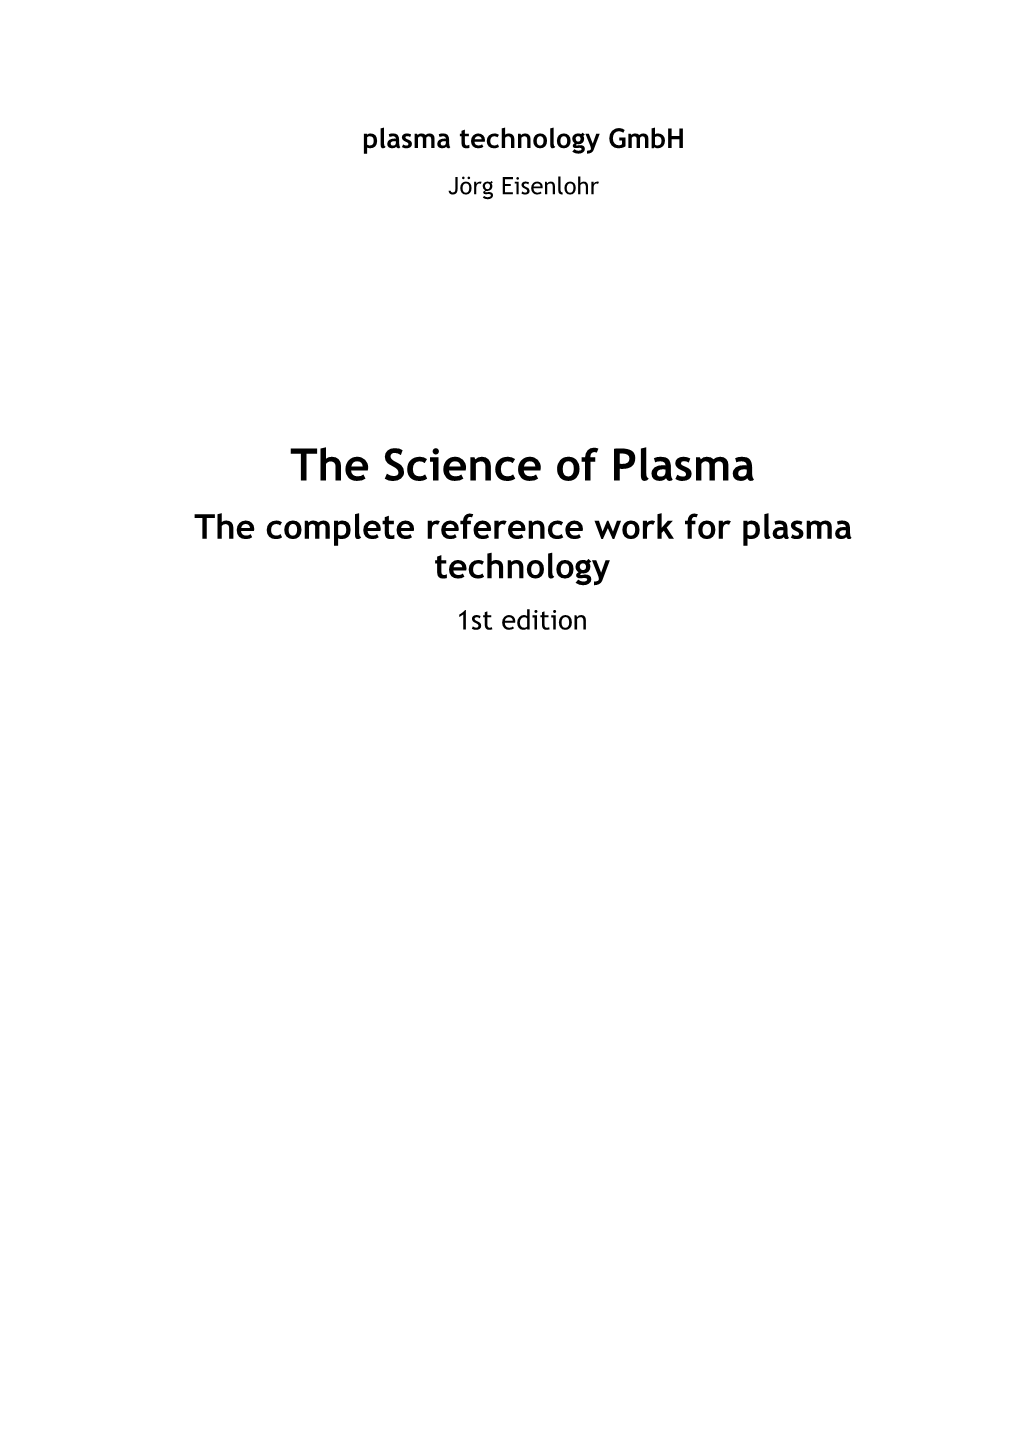 The Science of Plasma